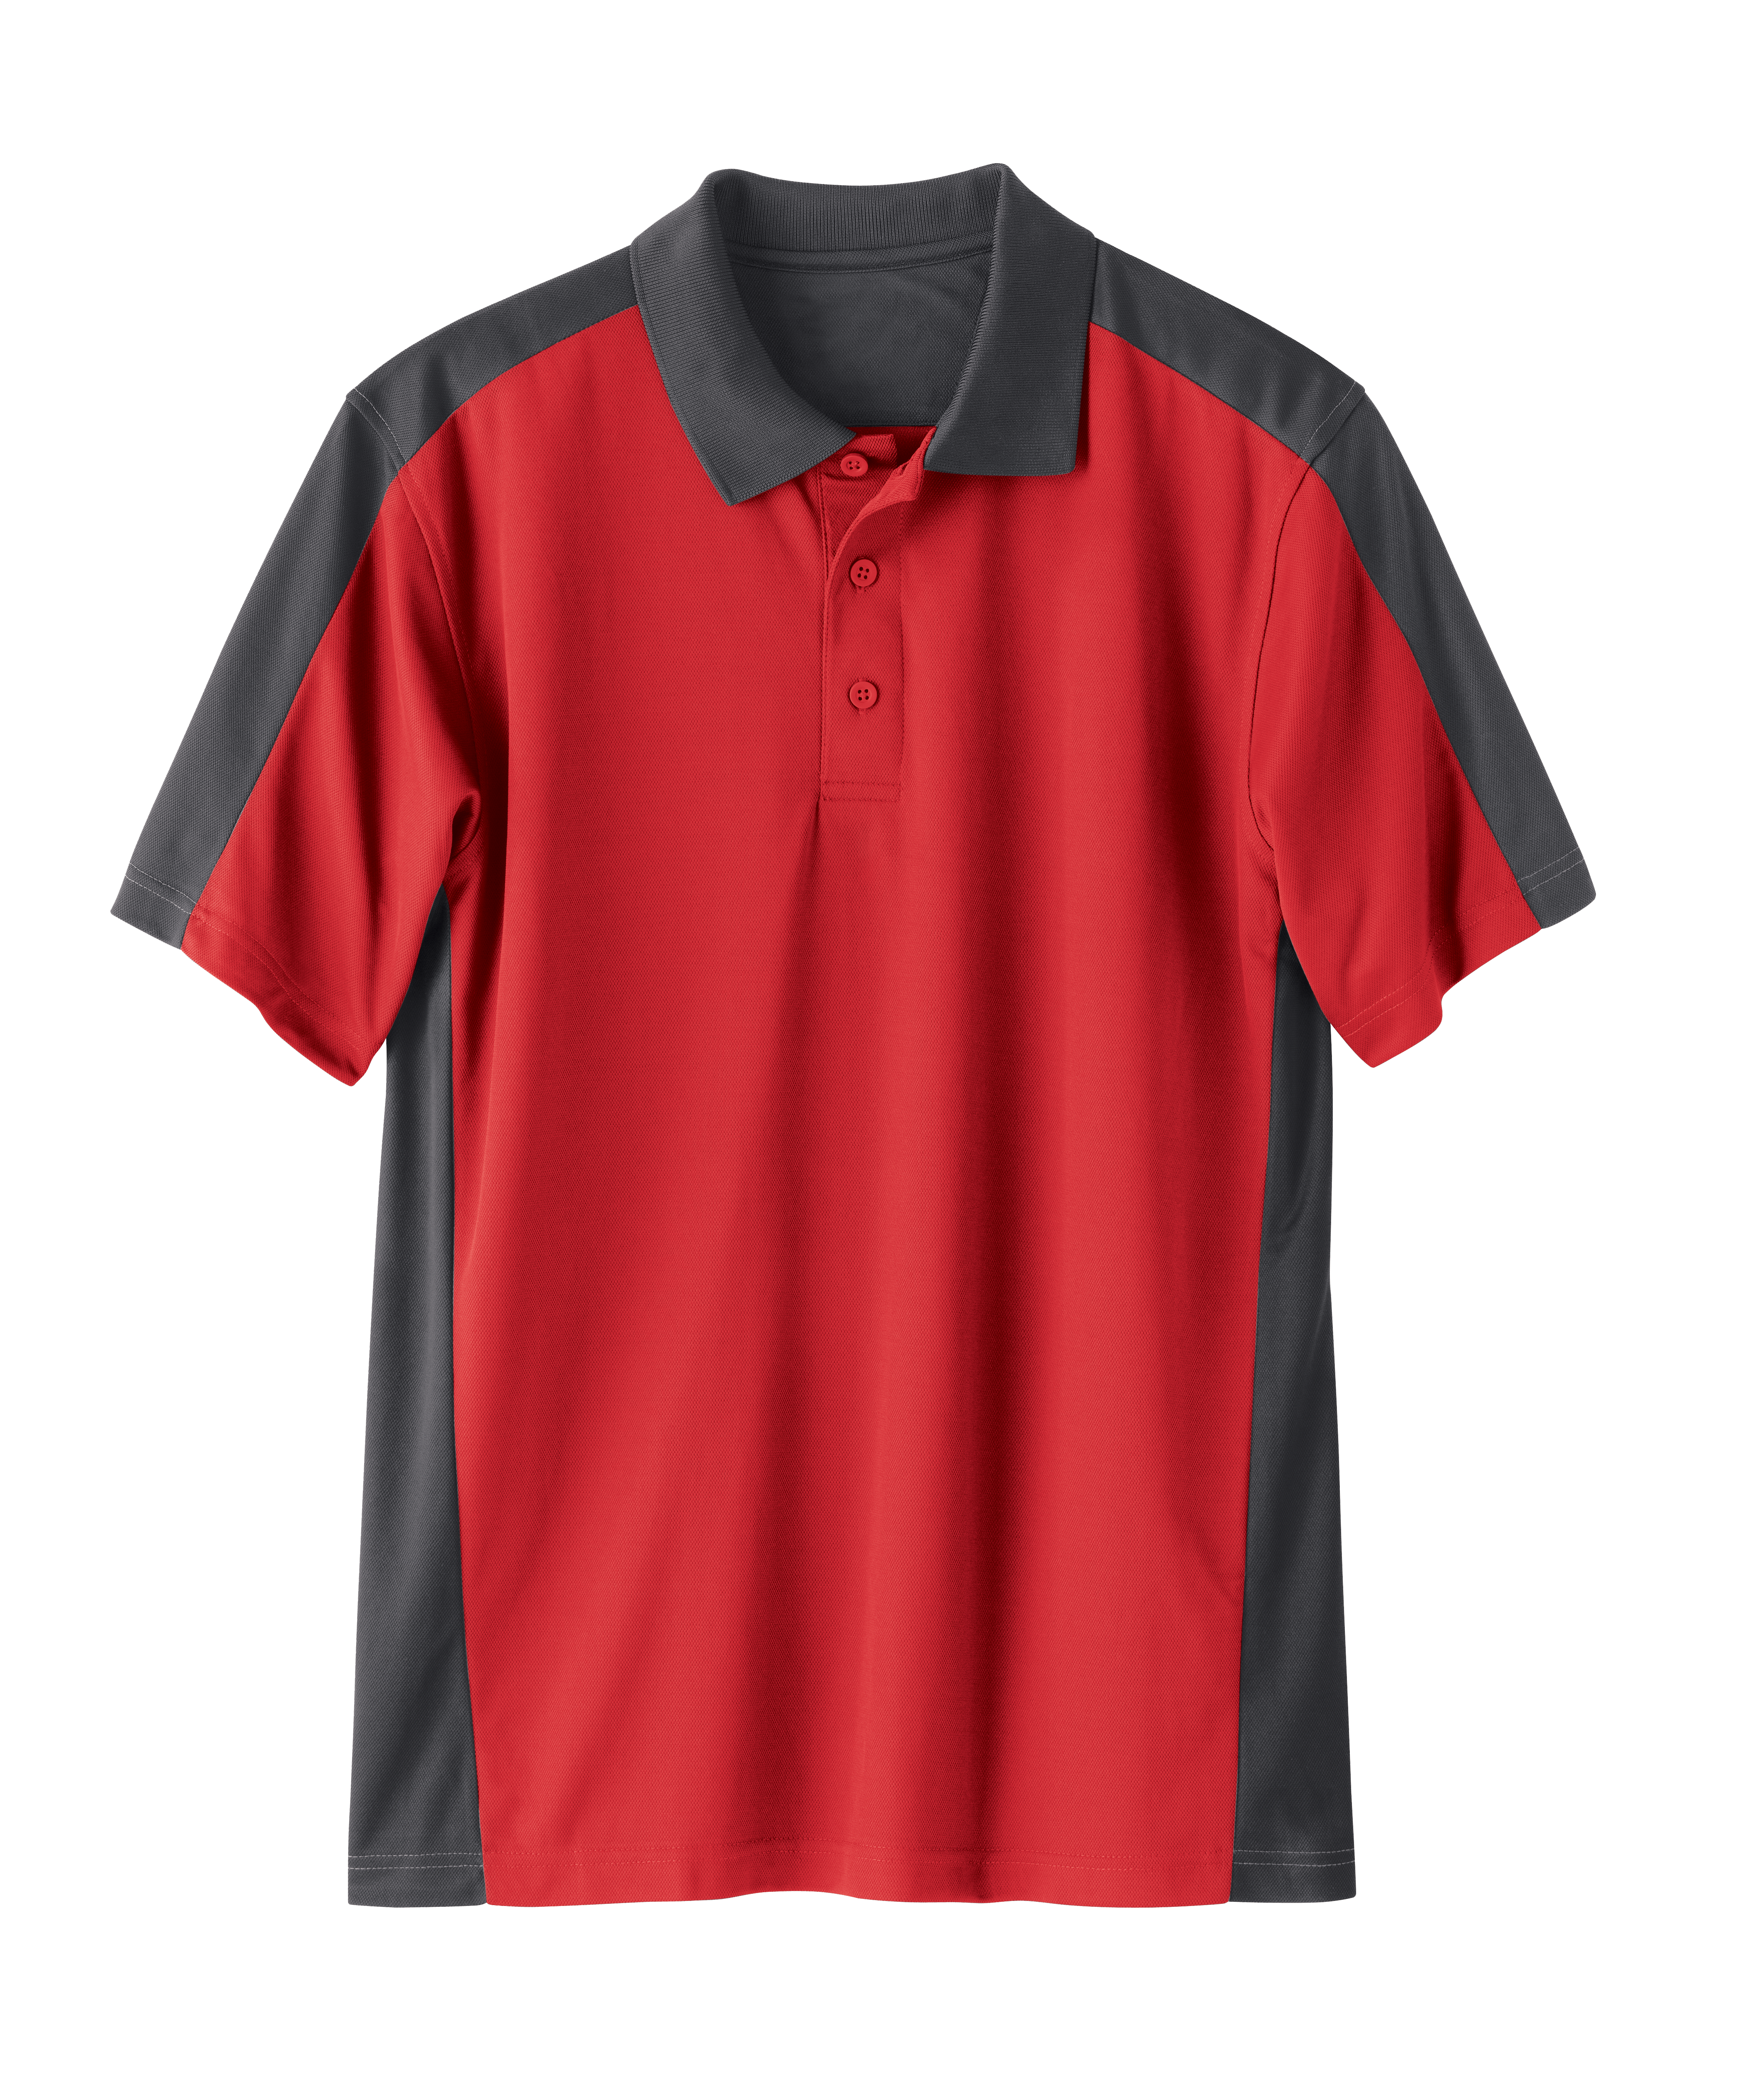 Navy/Medium Blue Short Sleeve 2X-Large Red Kap Men's Performance Knit Twill Shirt